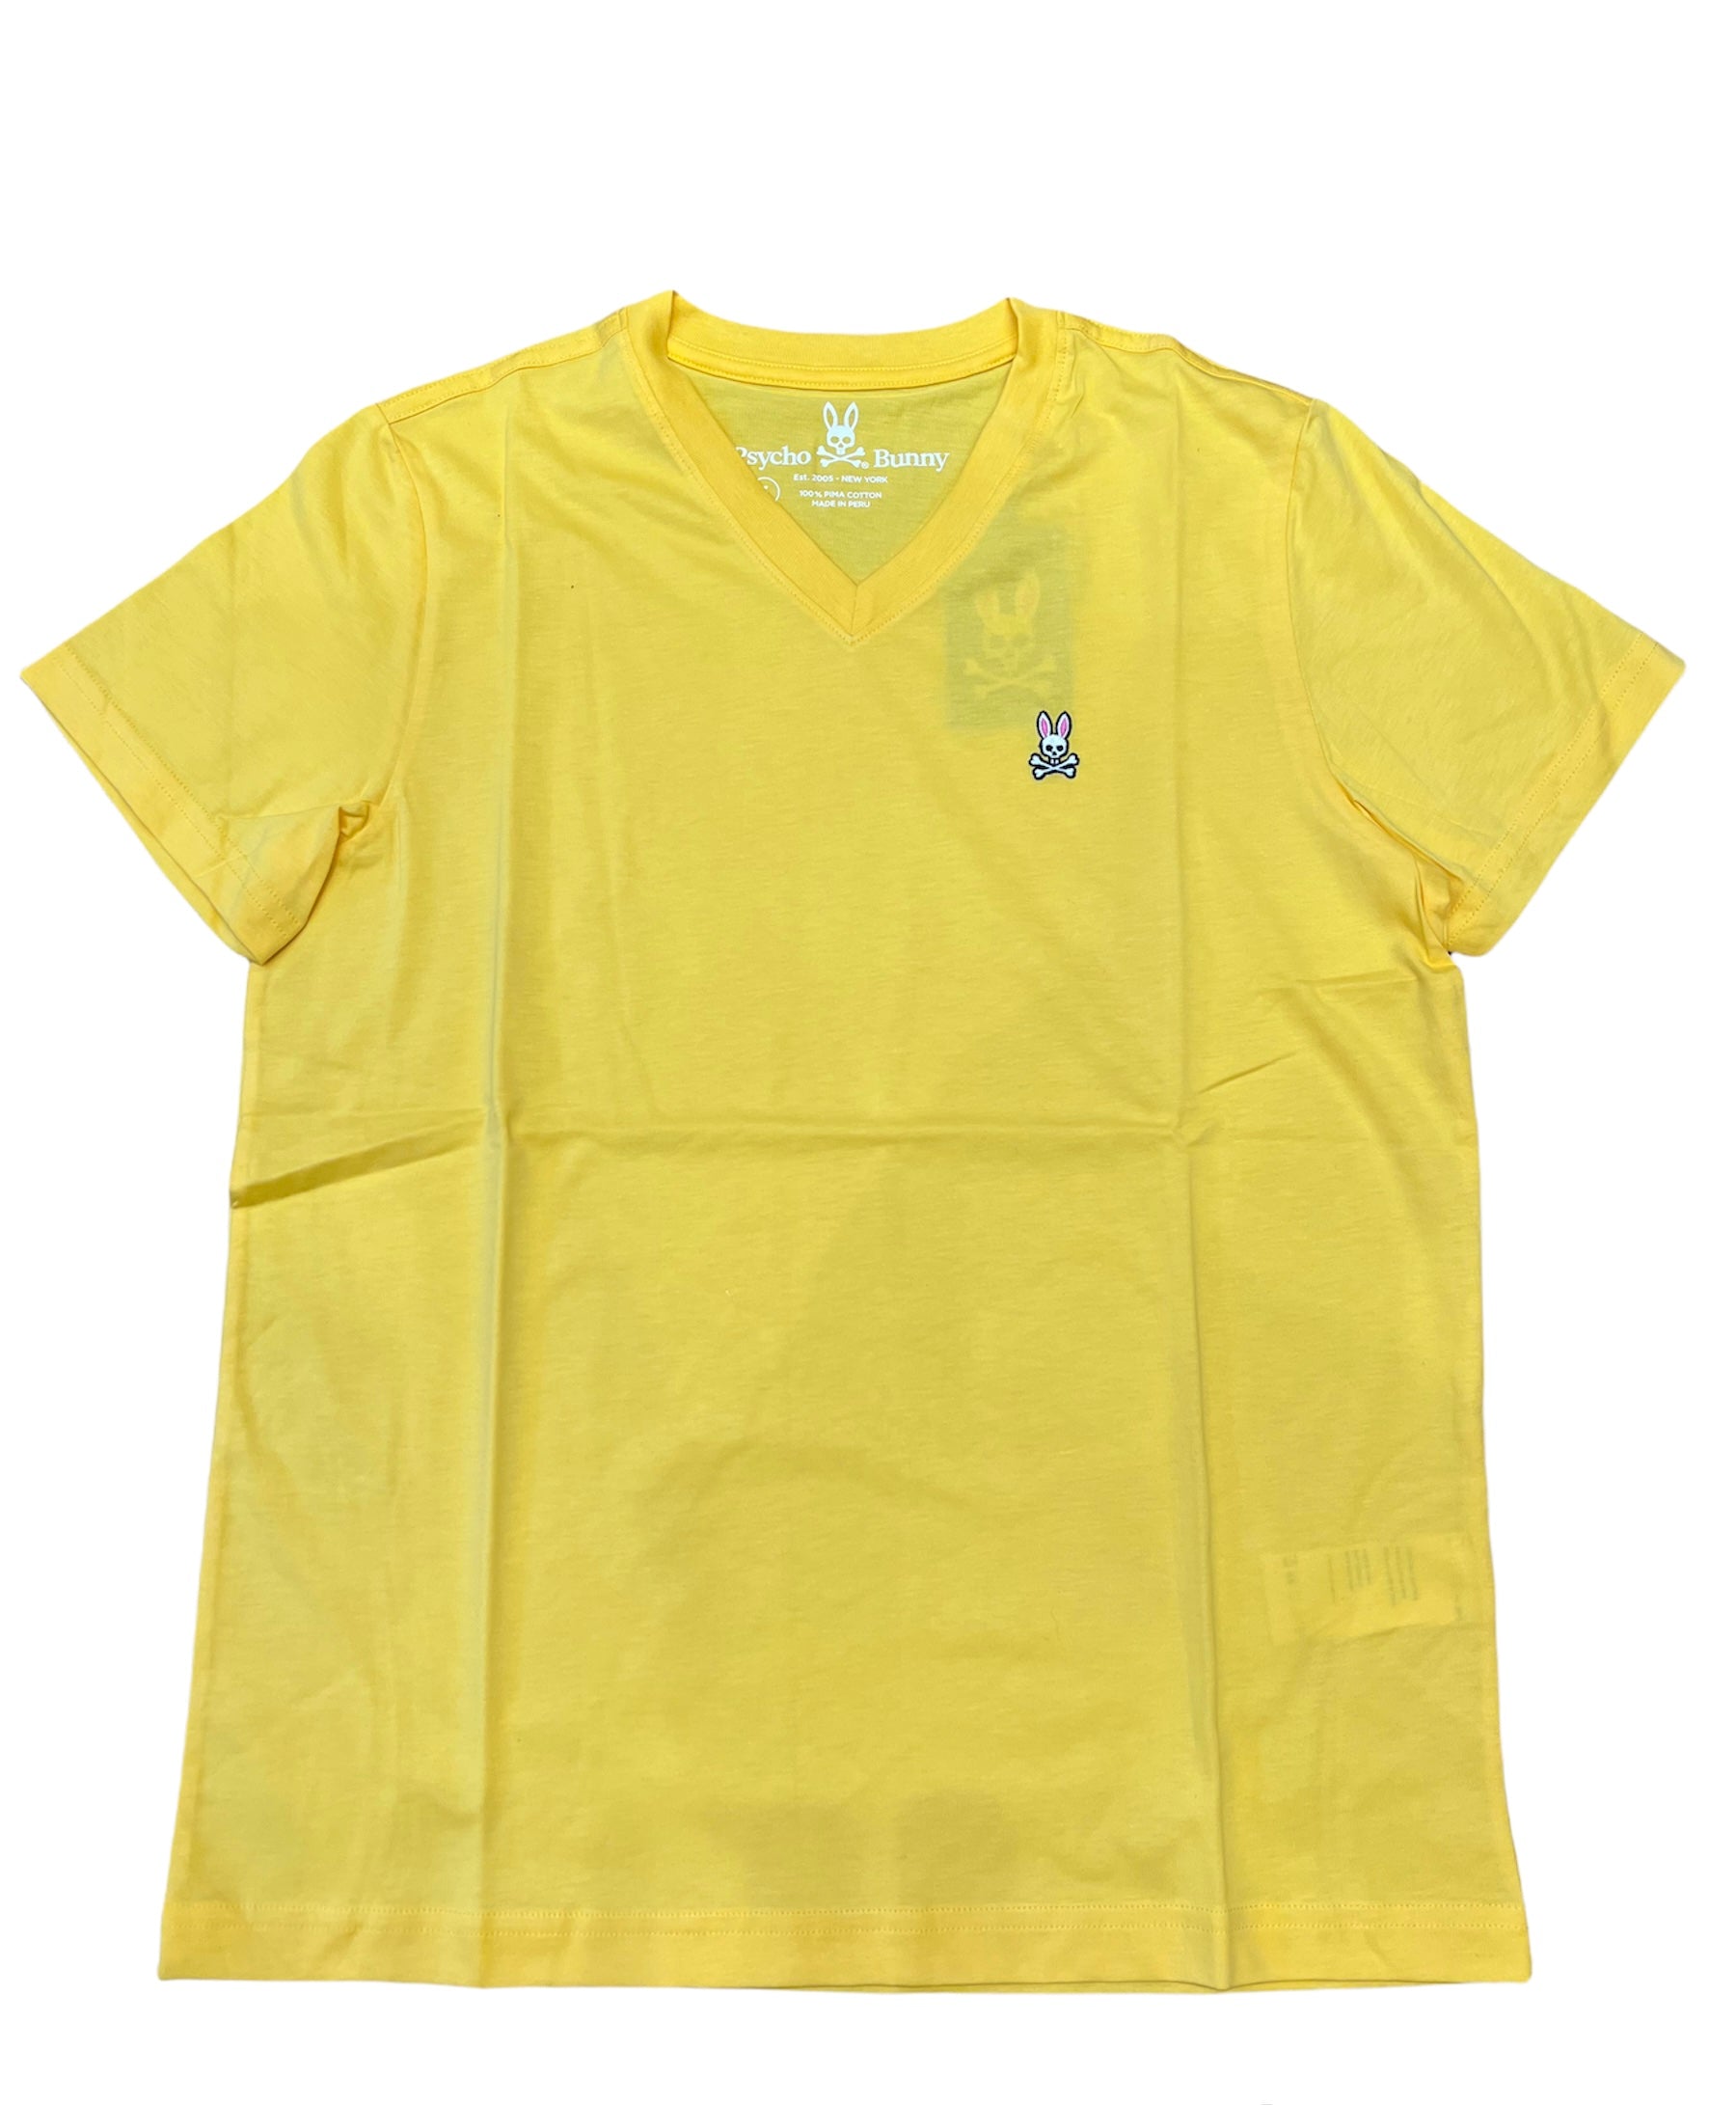 Classic V-Neck Tee shirt Golden Ray